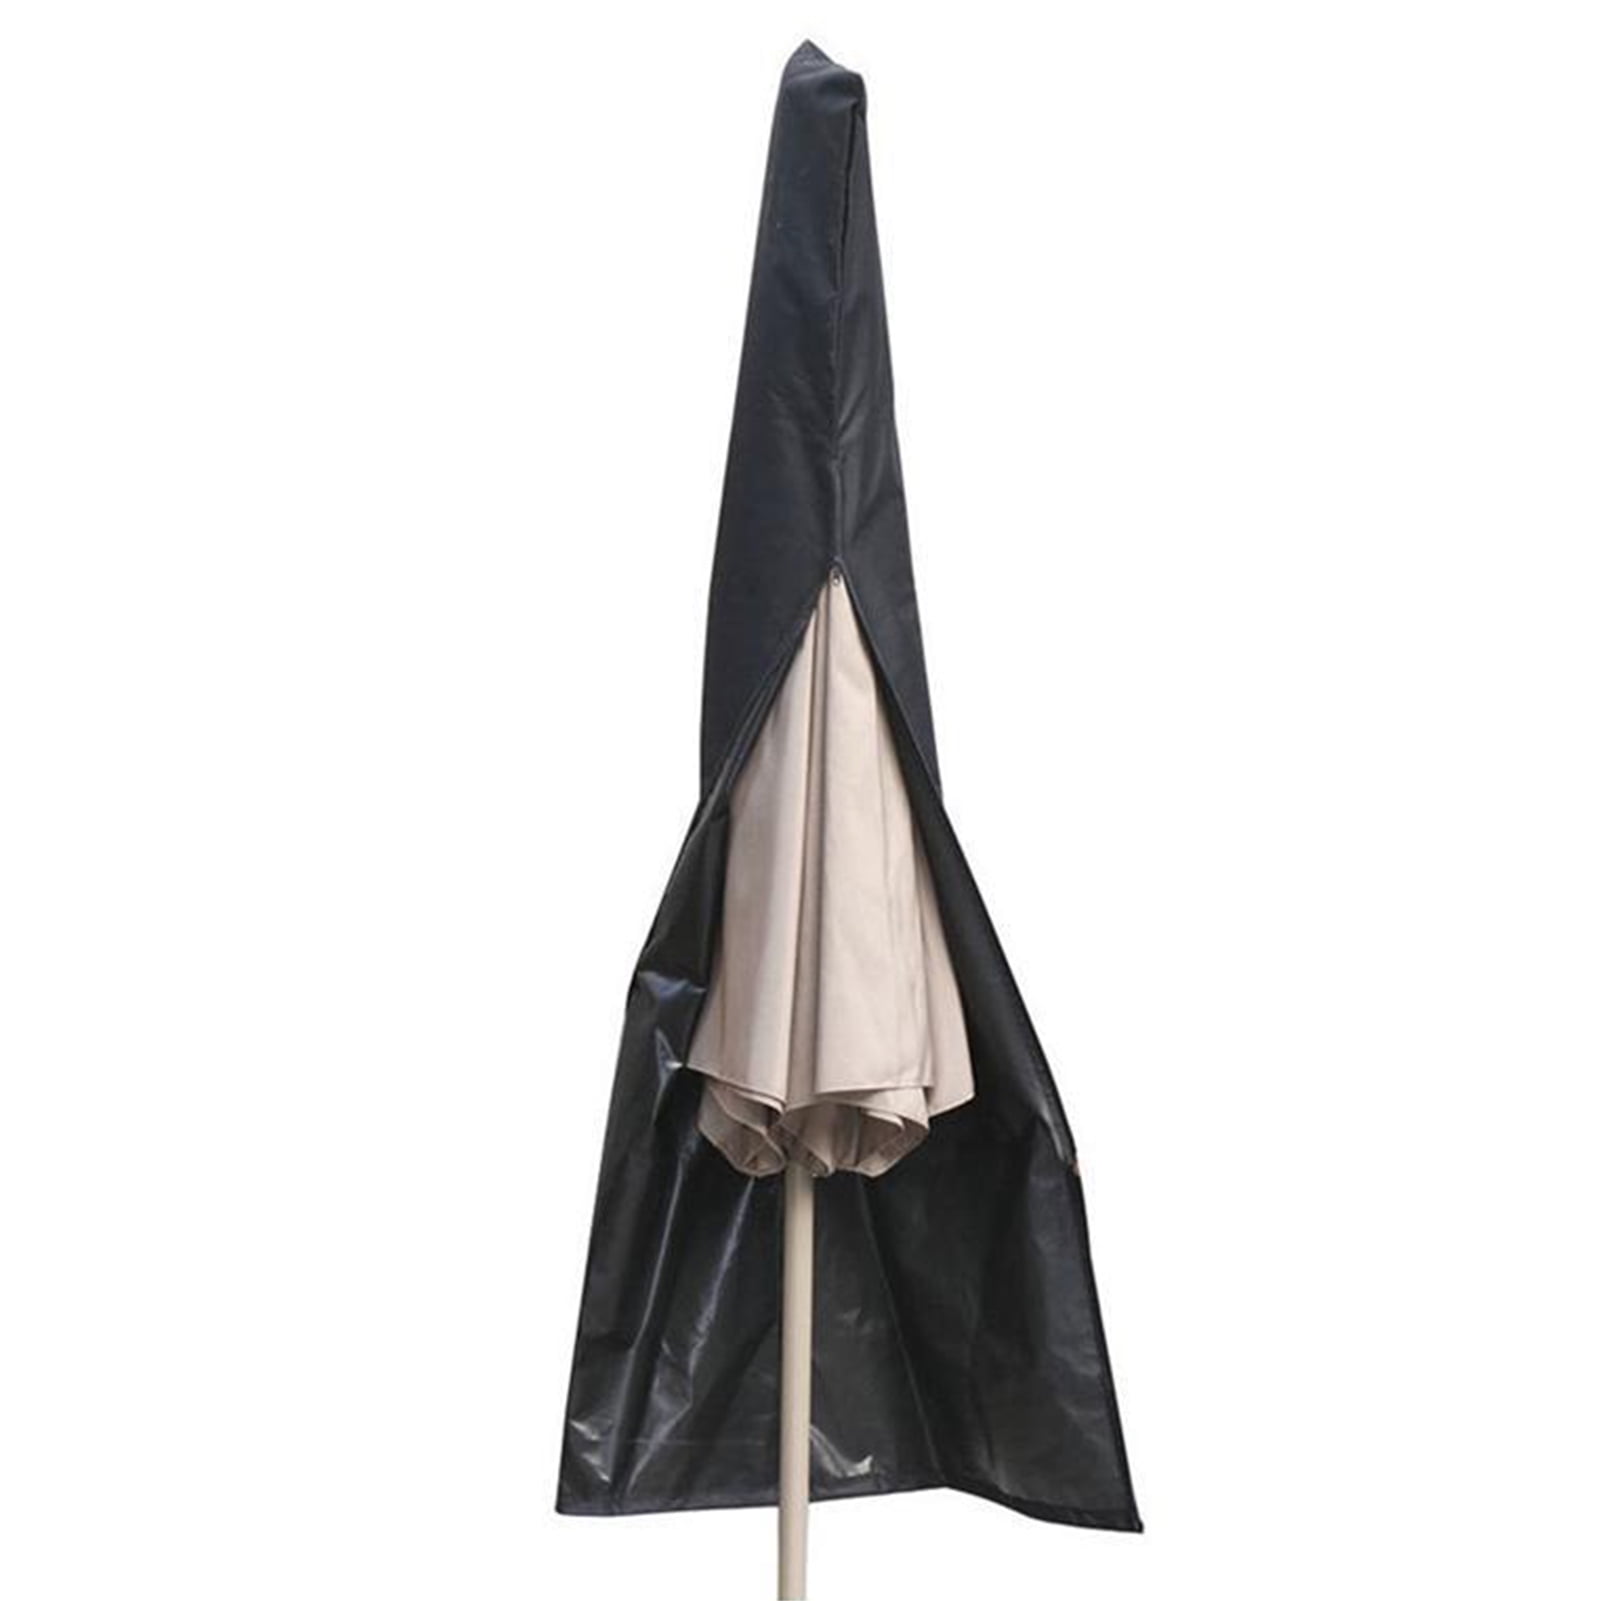 Details about   Patio Weatherproof Market Umbrella Cover with Zipper Outdoor Water Resistance 